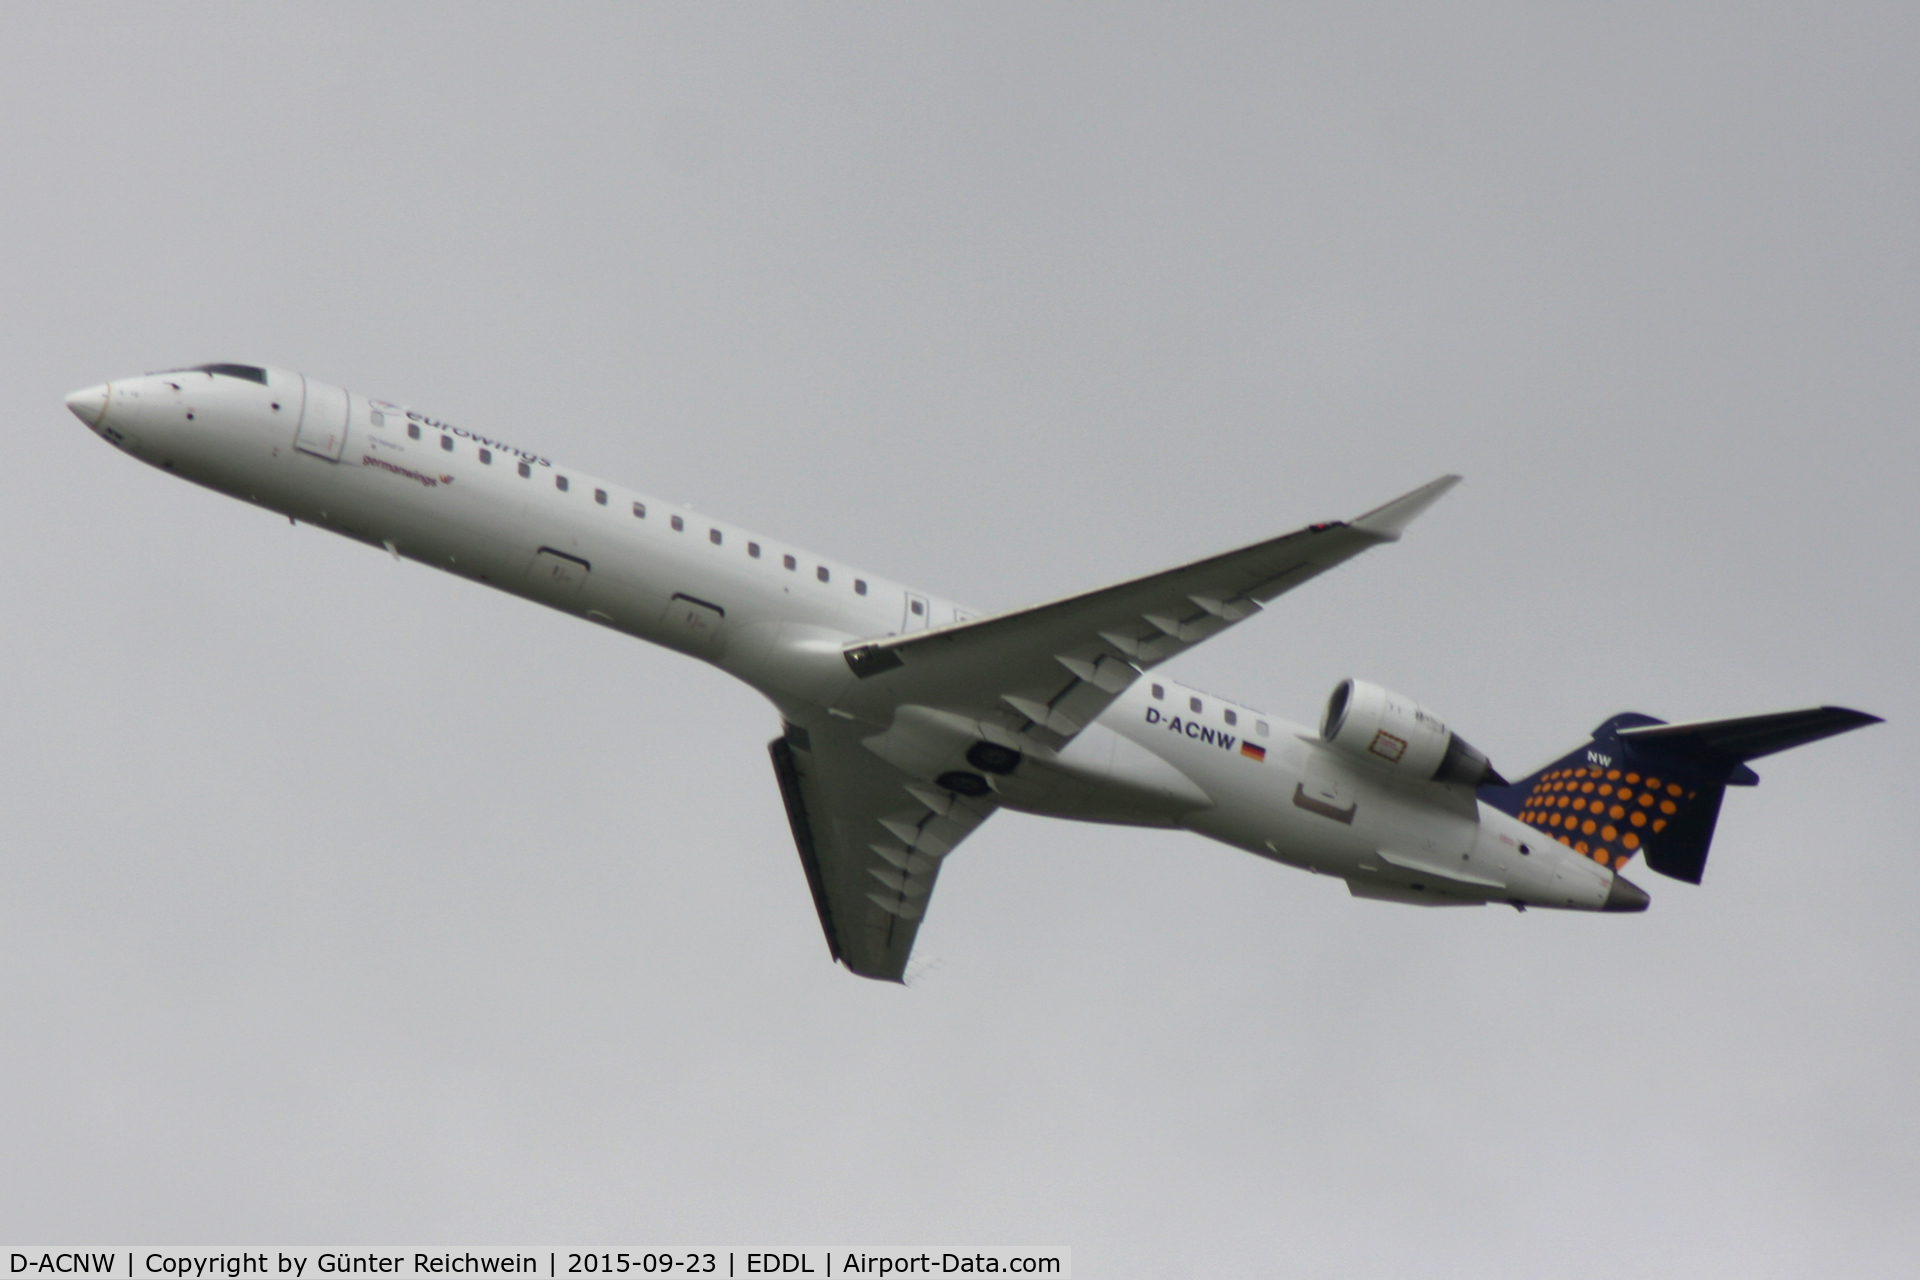 D-ACNW, 2011 Bombardier CRJ-900LR (CL-600-2D24) C/N 15269, Departing from Dusseldorf